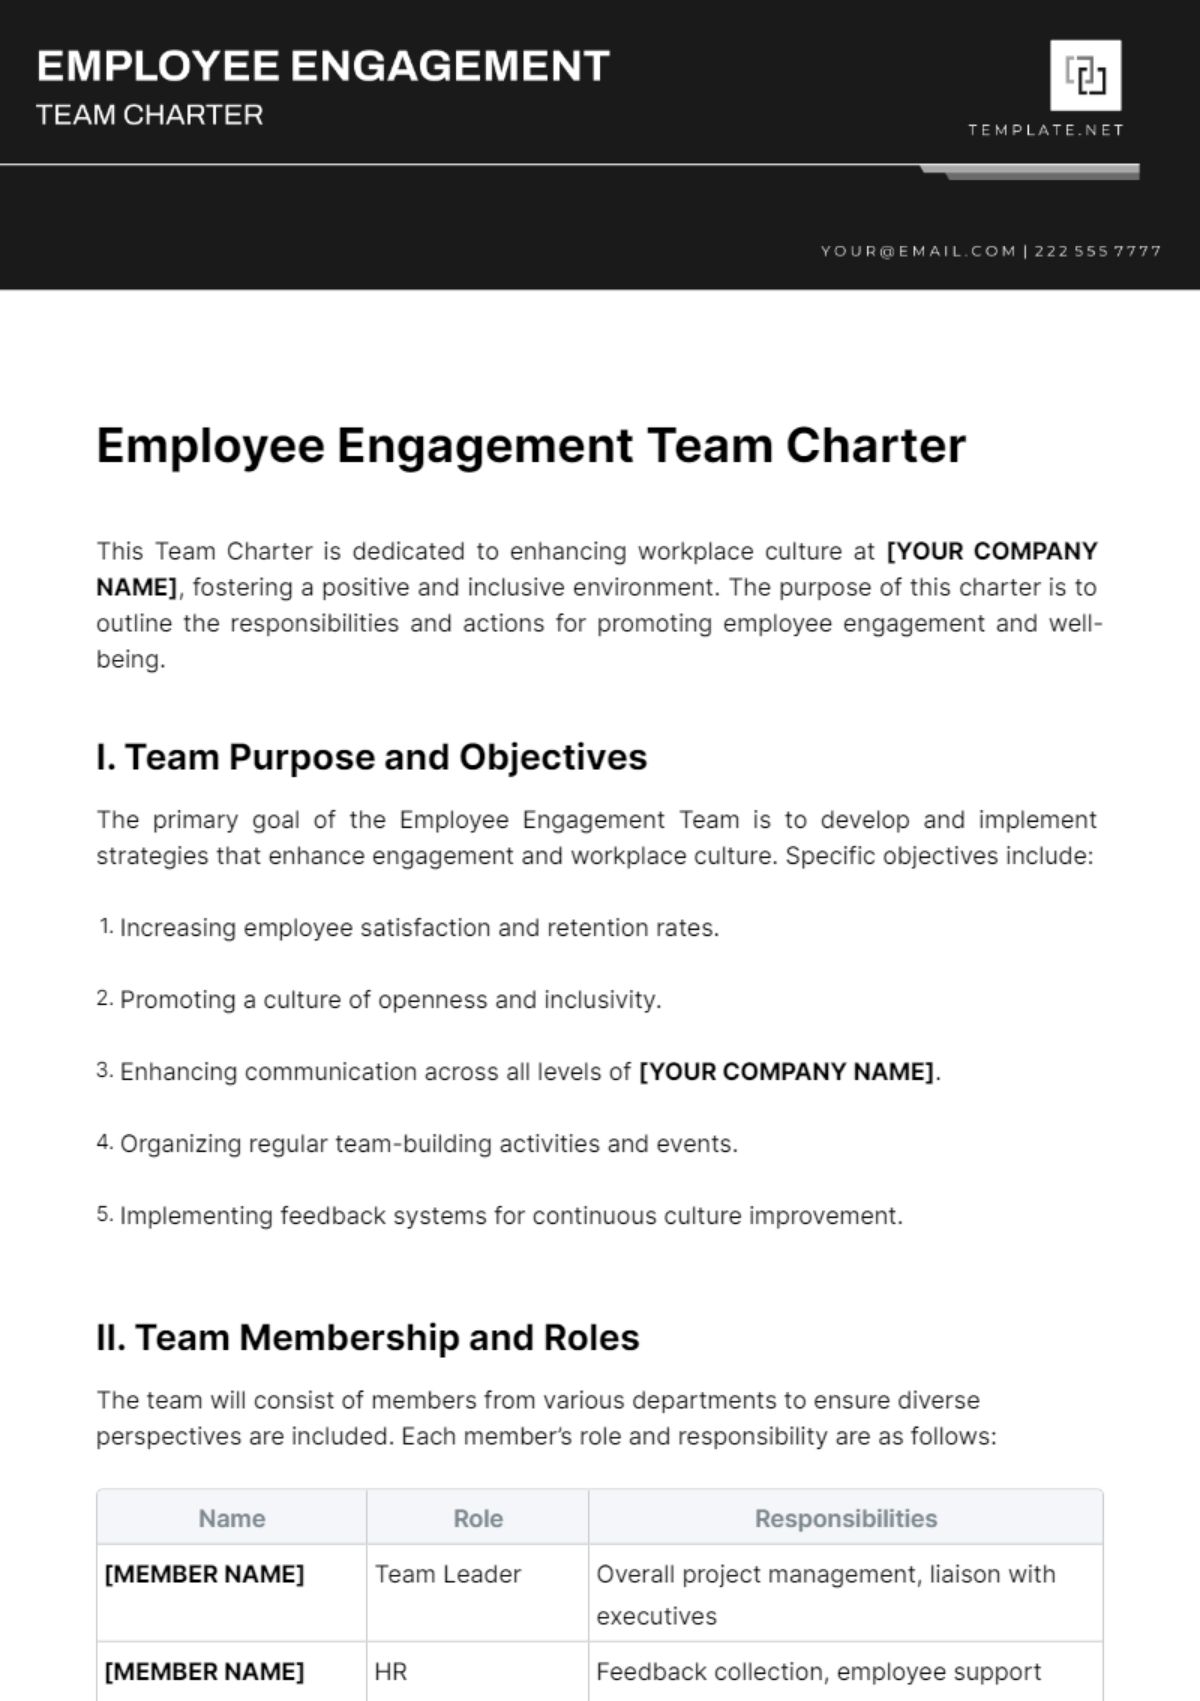 Free Employee Engagement Team Charter Template